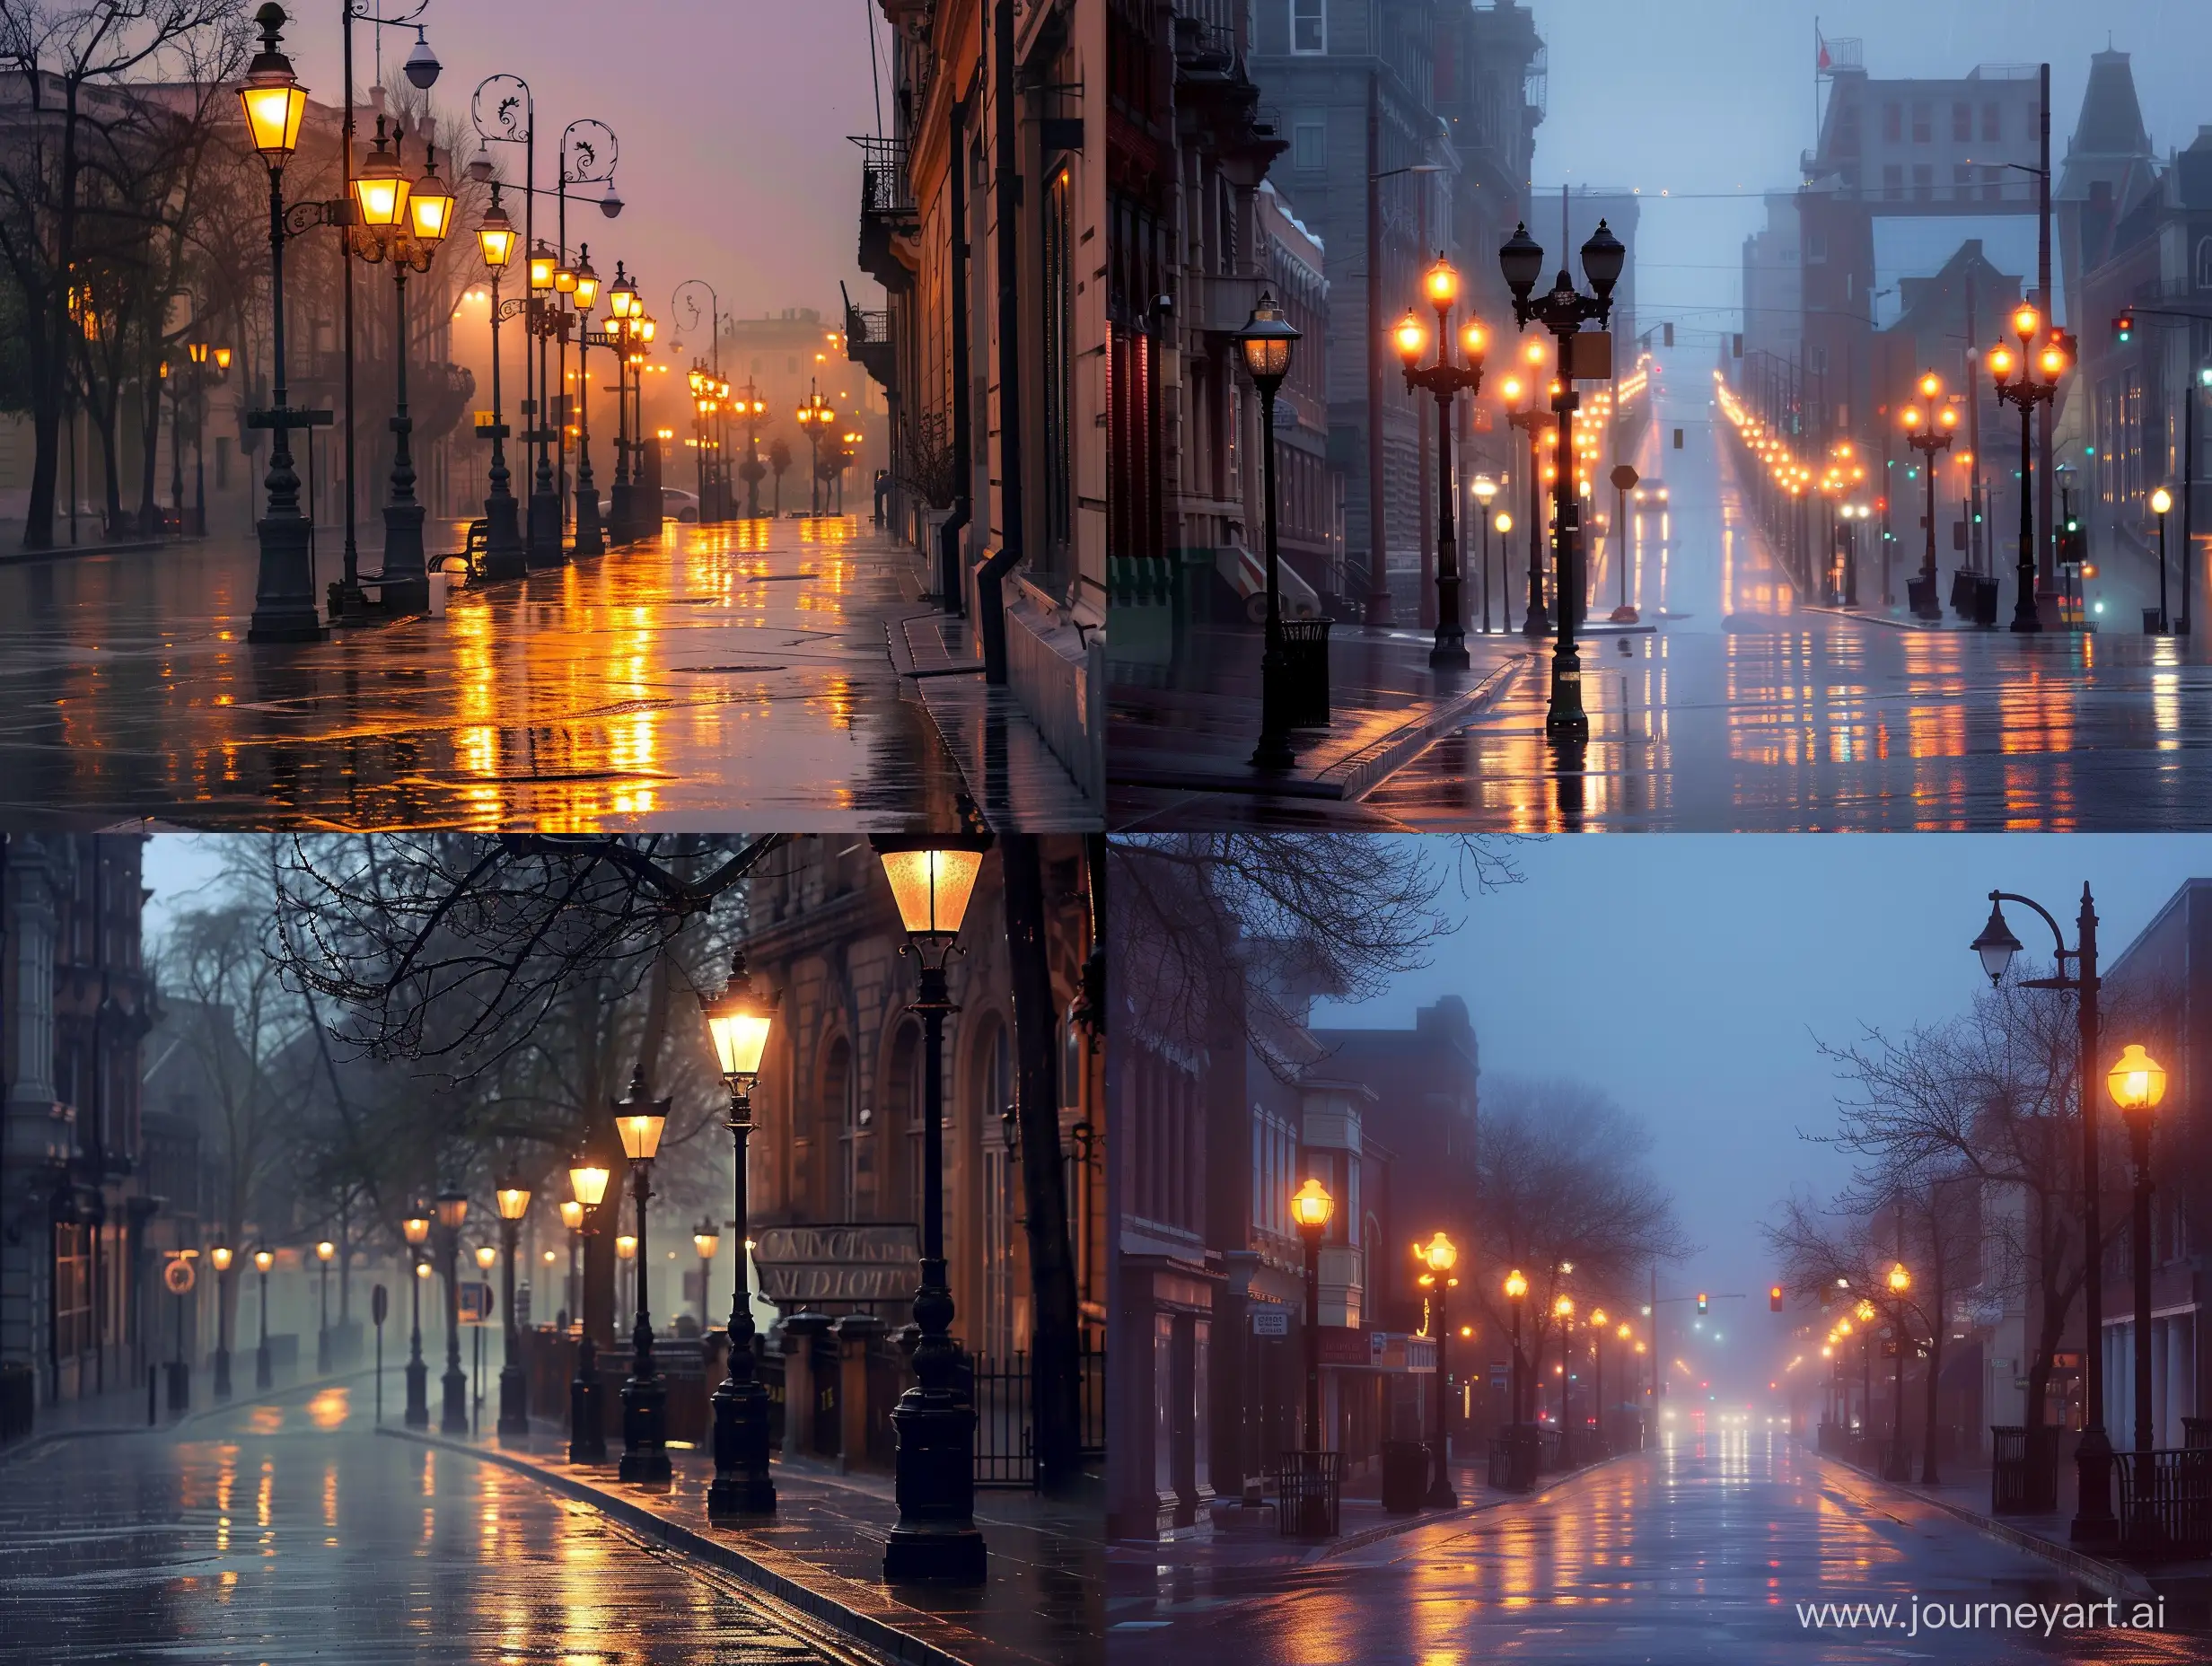 big town, early morning, street, rain, street lamps